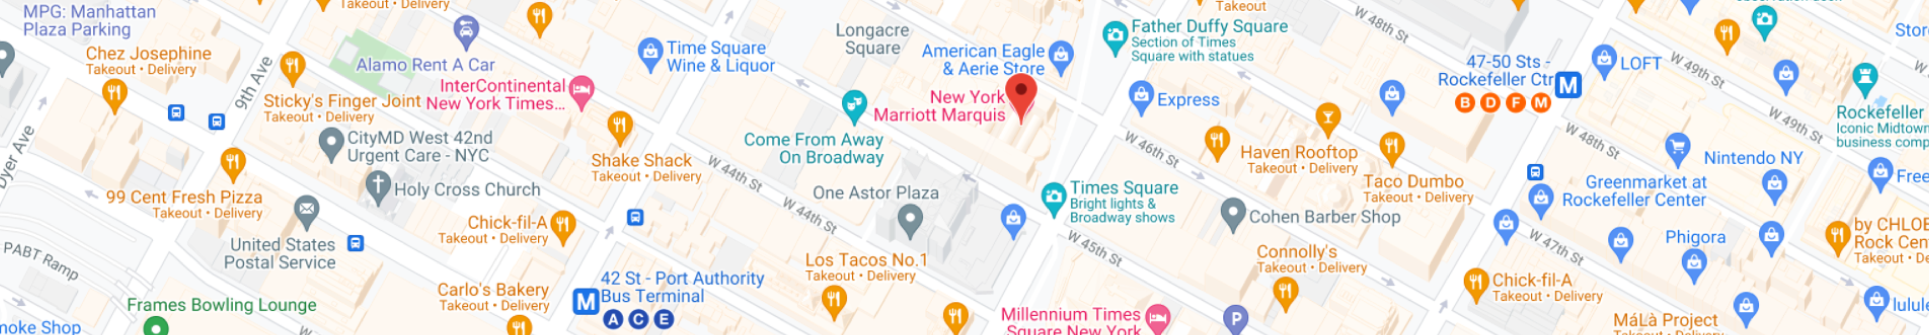 City-Experts-Marriott-Marquis-New-York-Map-Header